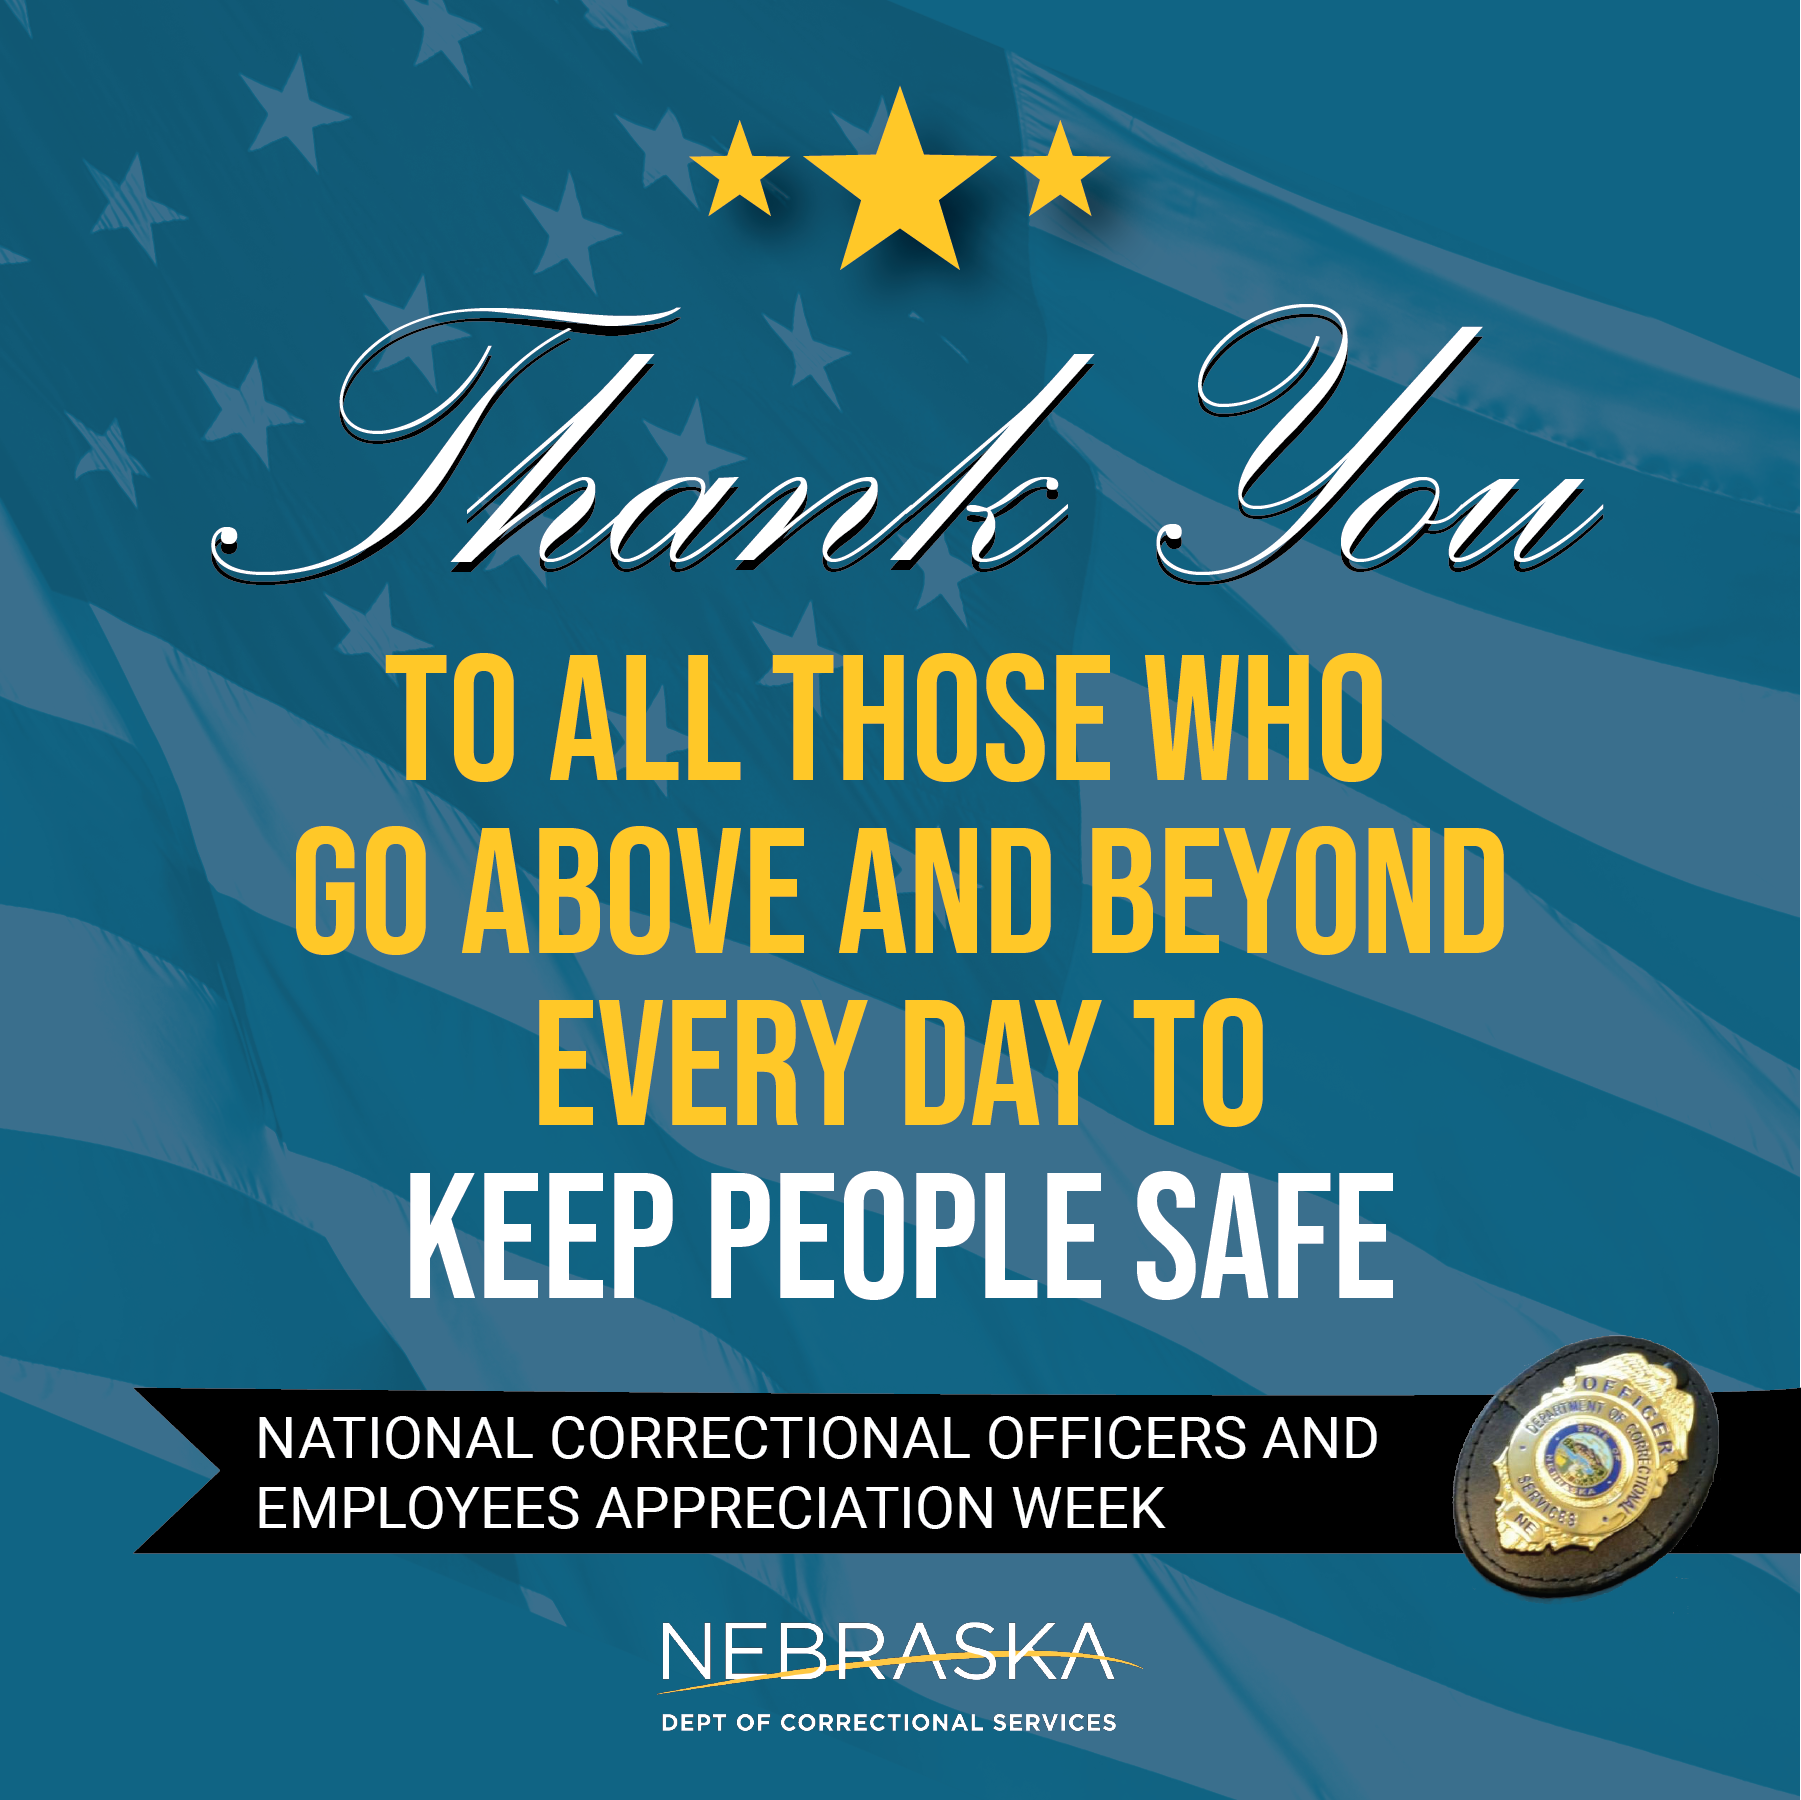 National Correctional Officers and Teammates Appreciation Week NDCS